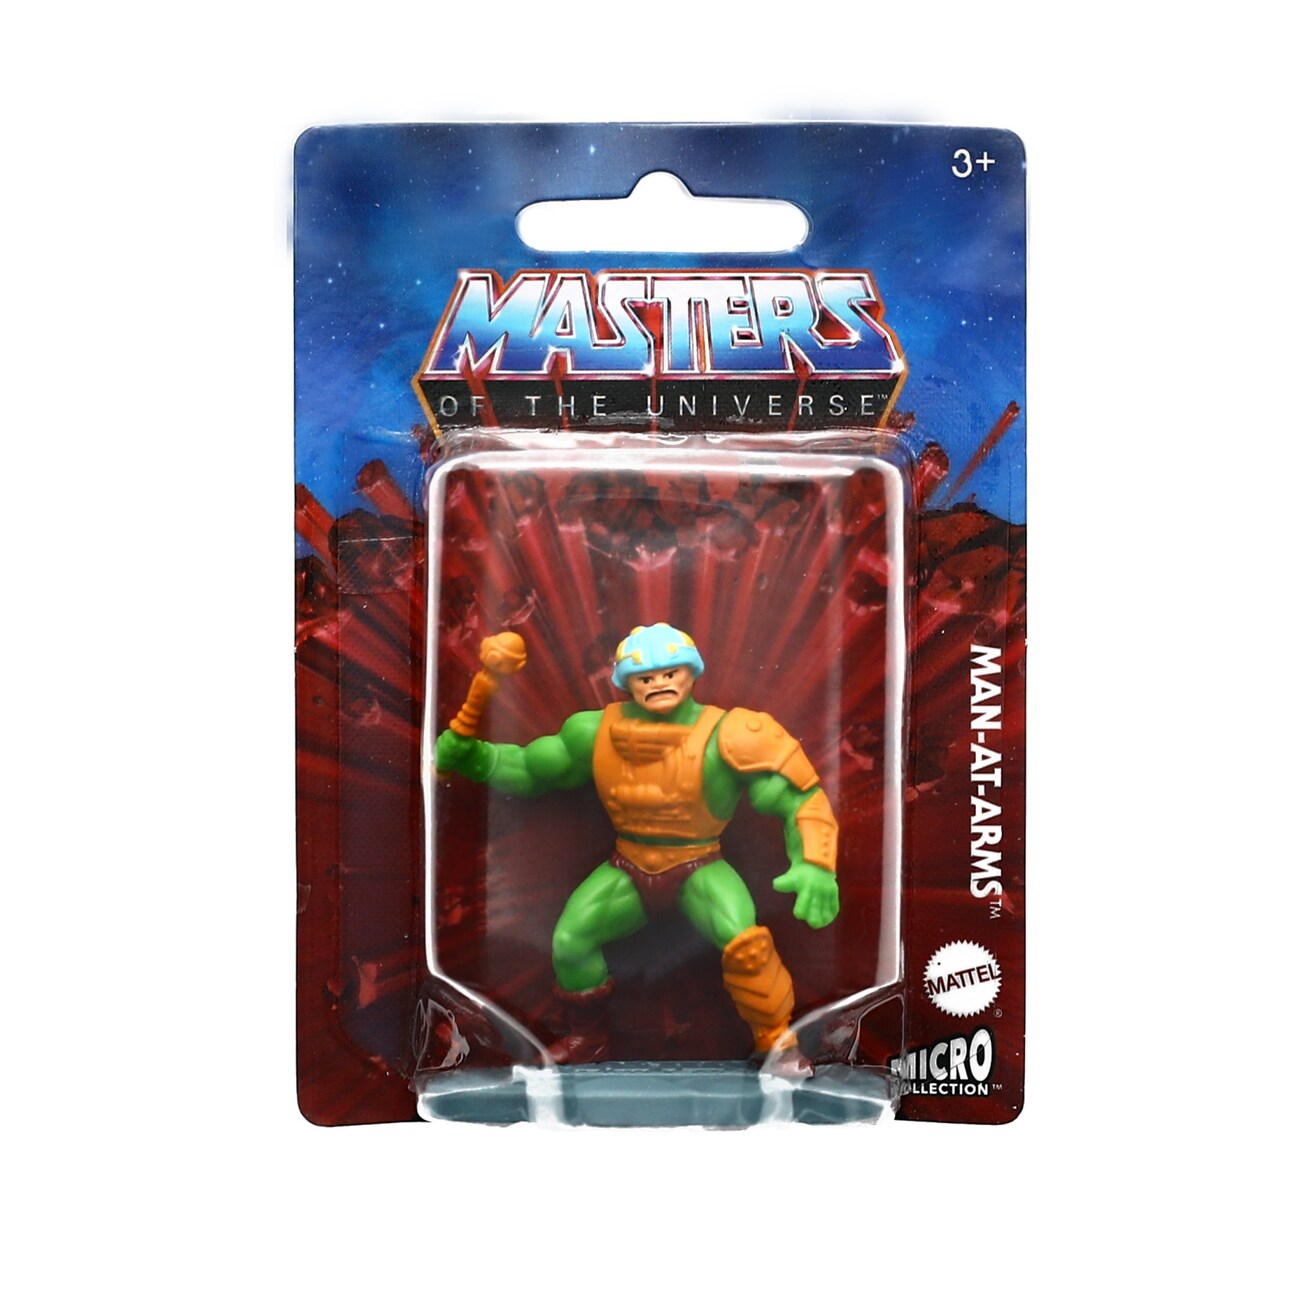 Masters of the Universe Mini Figurines